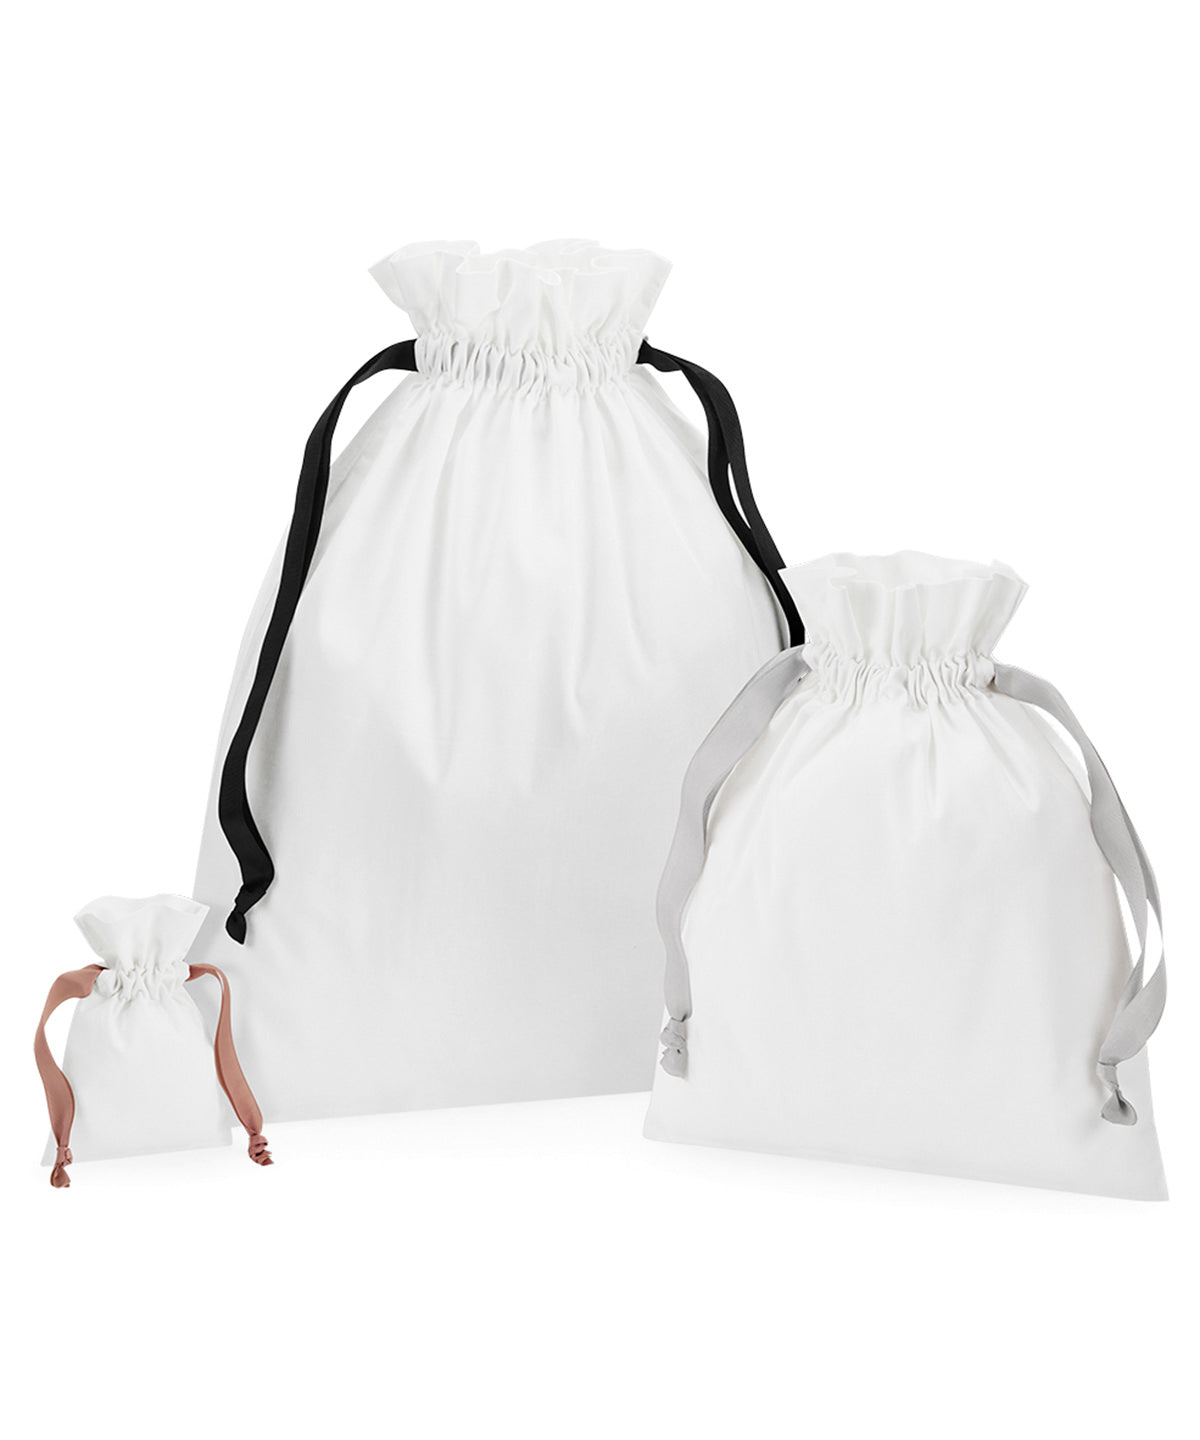 Töskur - Cotton Gift Bag With Ribbon Drawstring